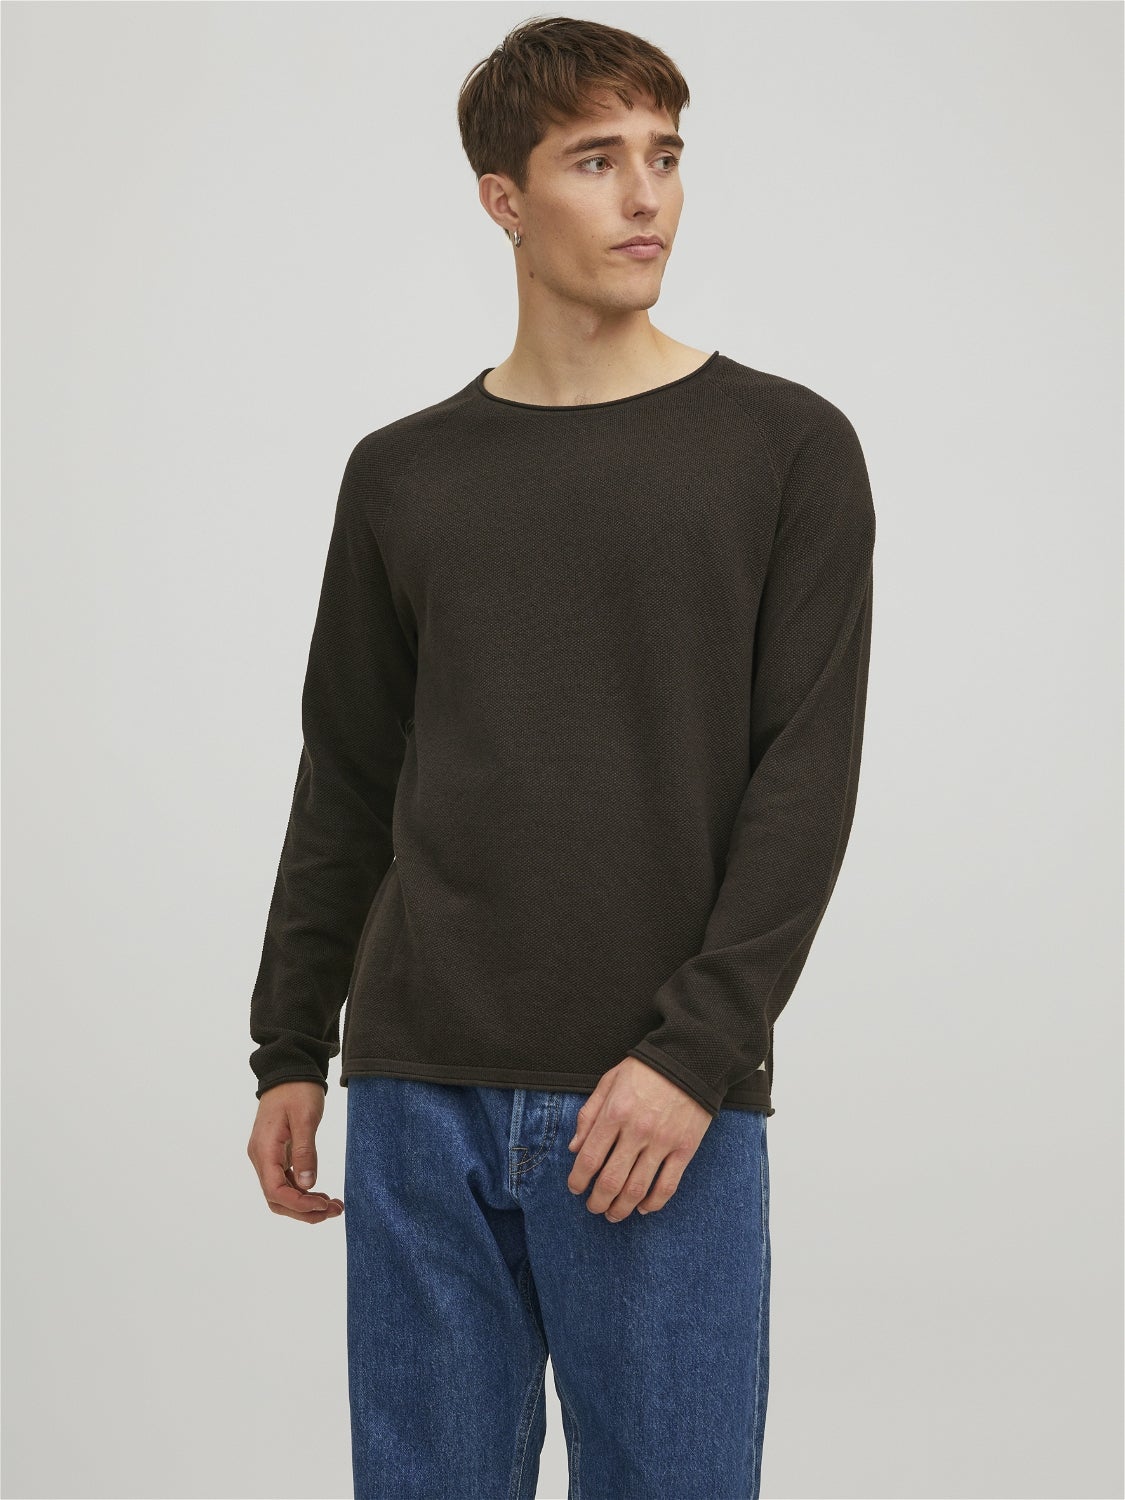 Gray/Multicolored M discount 57% Jack & Jones sweatshirt MEN FASHION Jumpers & Sweatshirts Print 